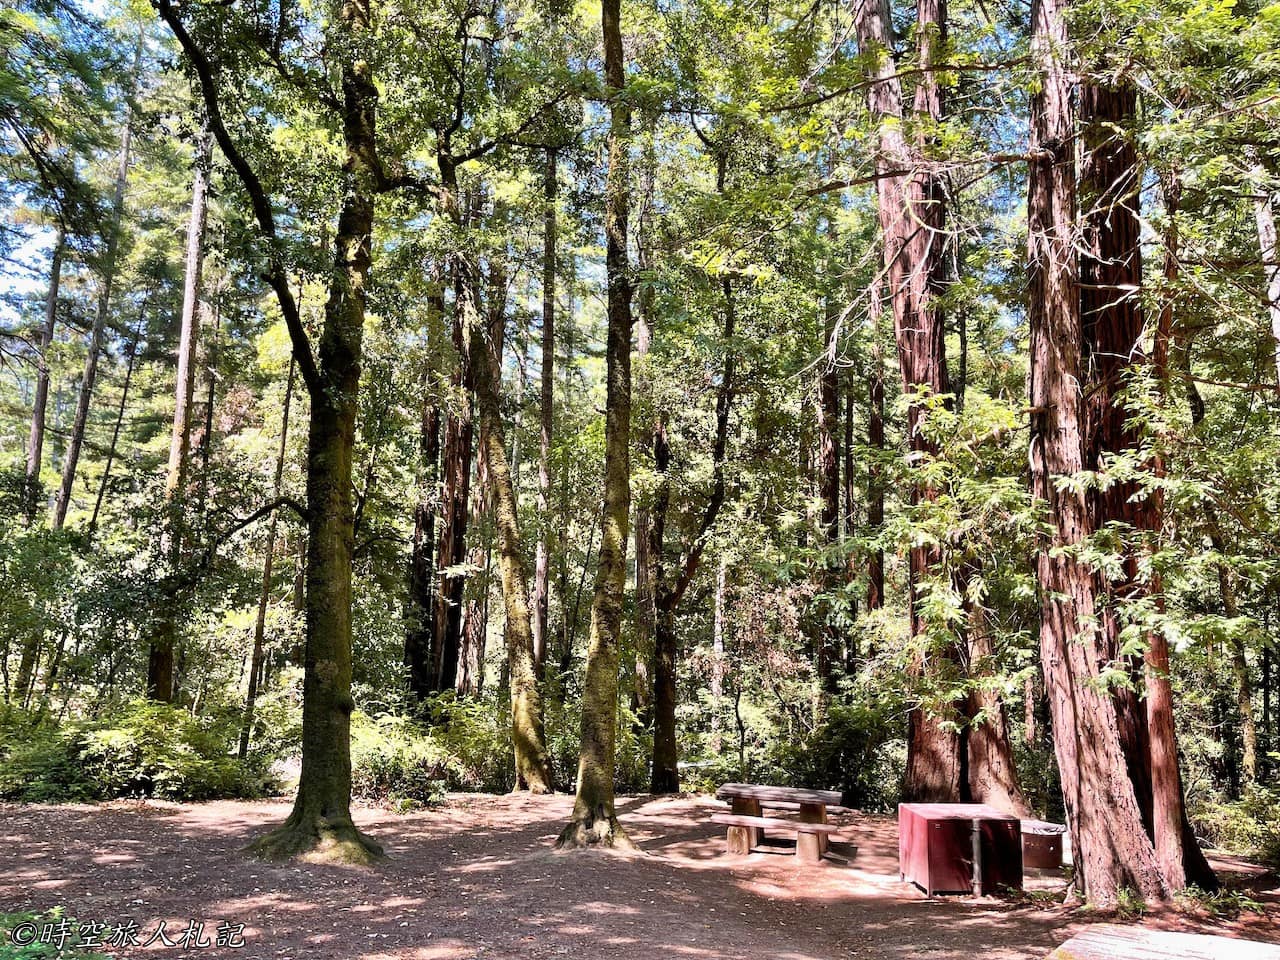 Portola redwood state park 13